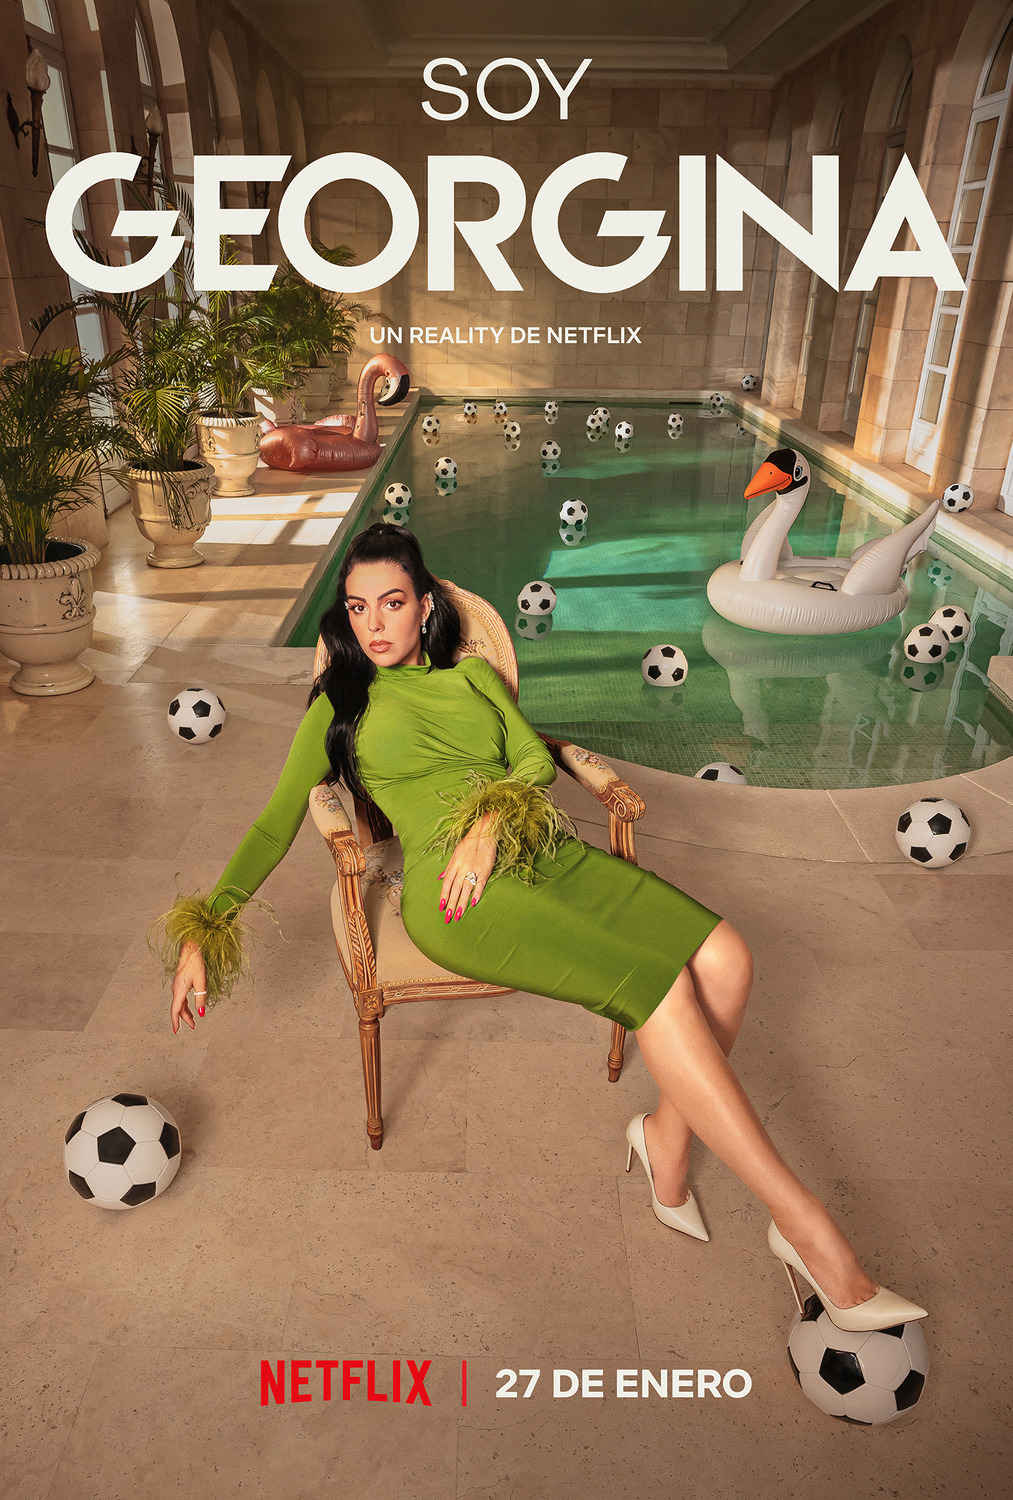 Extra Large TV Poster Image for I am Georgina (#1 of 7)